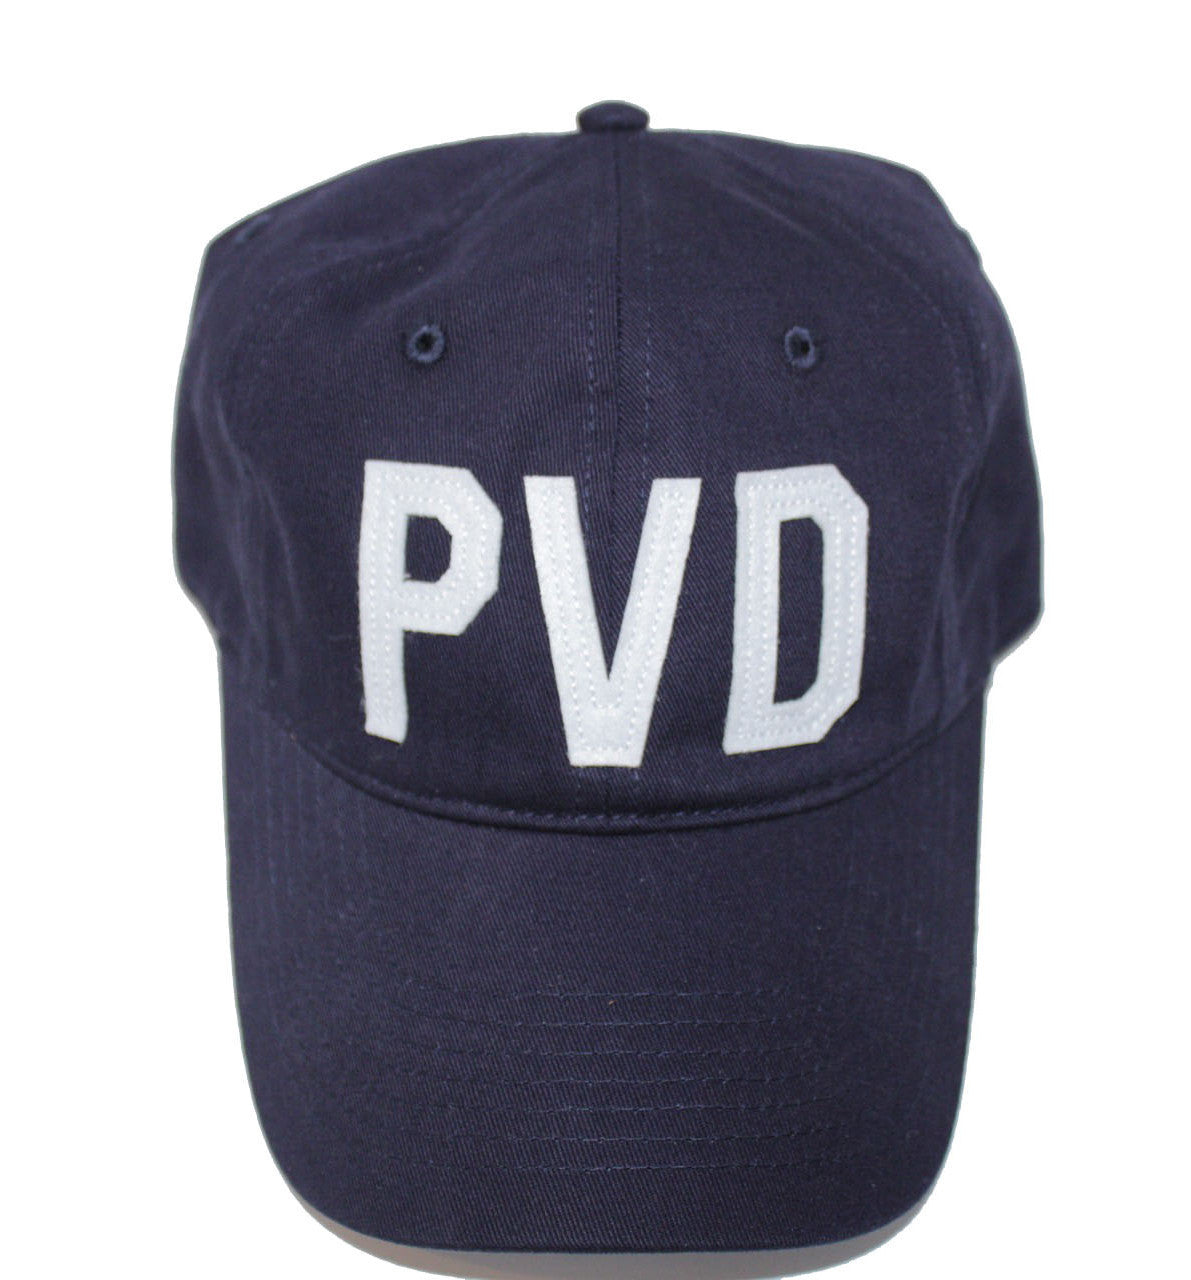 PVD - Providence, RI Hat